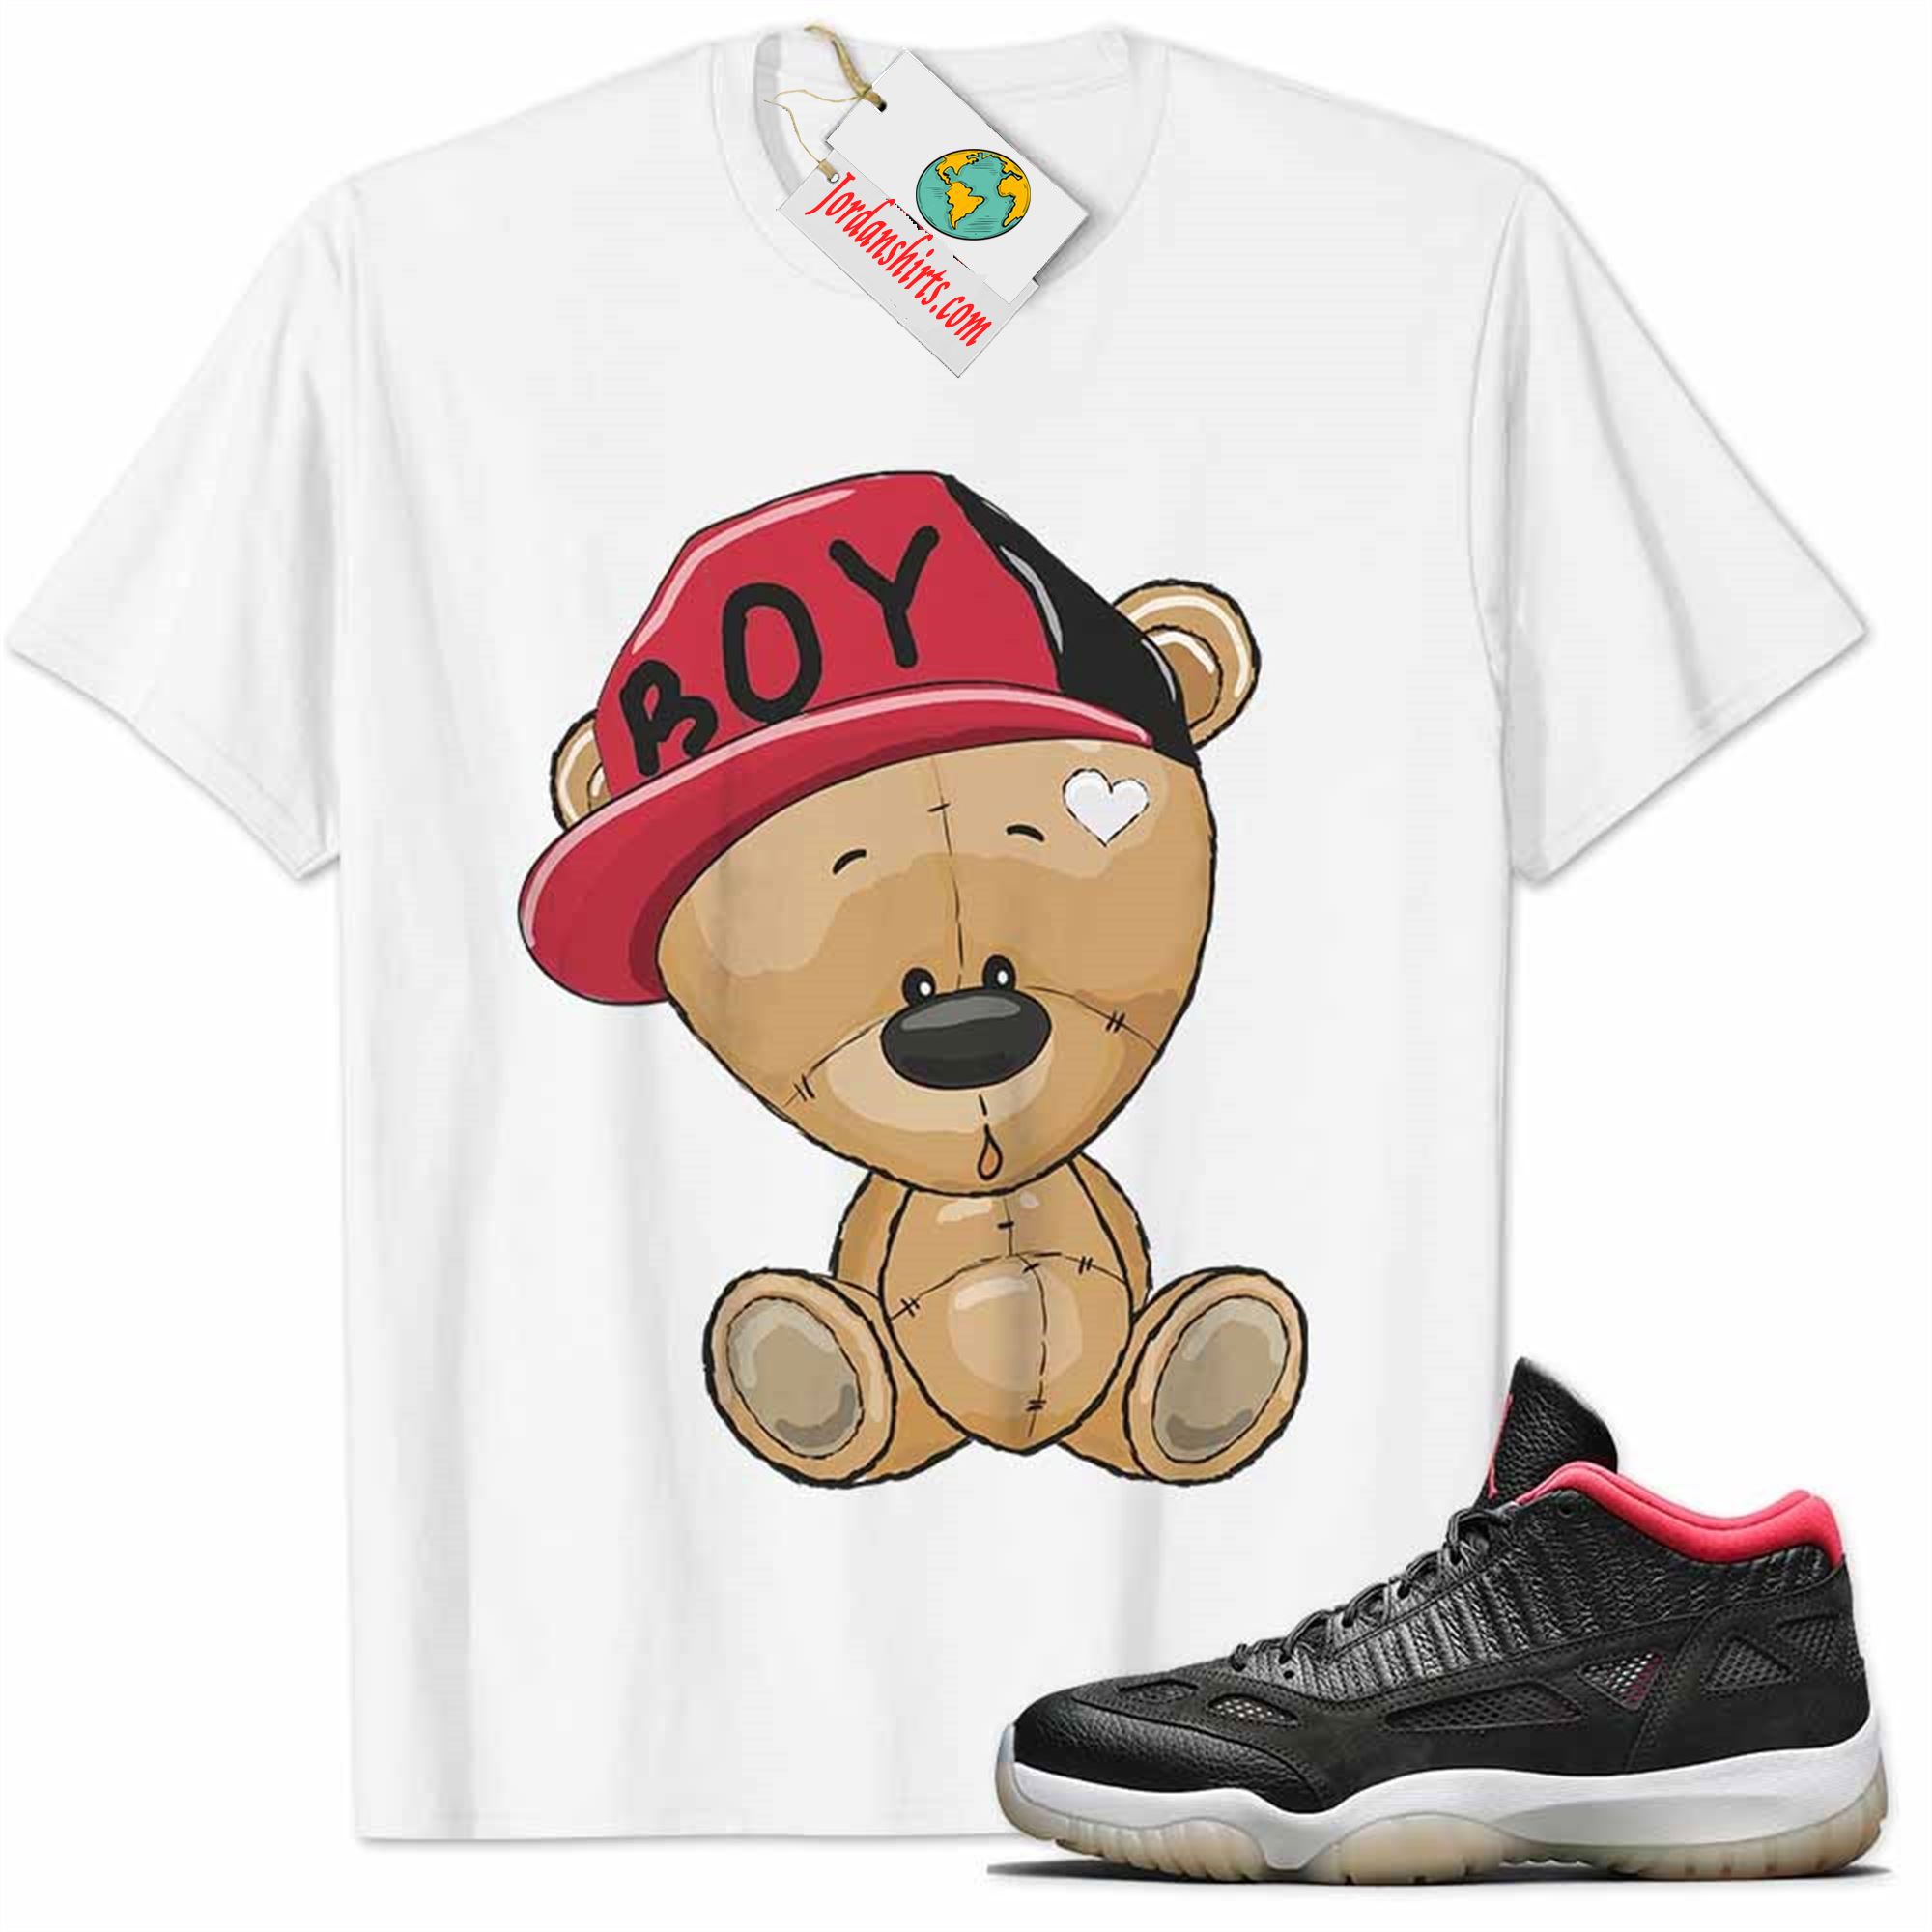 Jordan 11 Shirt, Jordan 11 Bred Shirt Cute Baby Teddy Bear White Full Size Up To 5xl